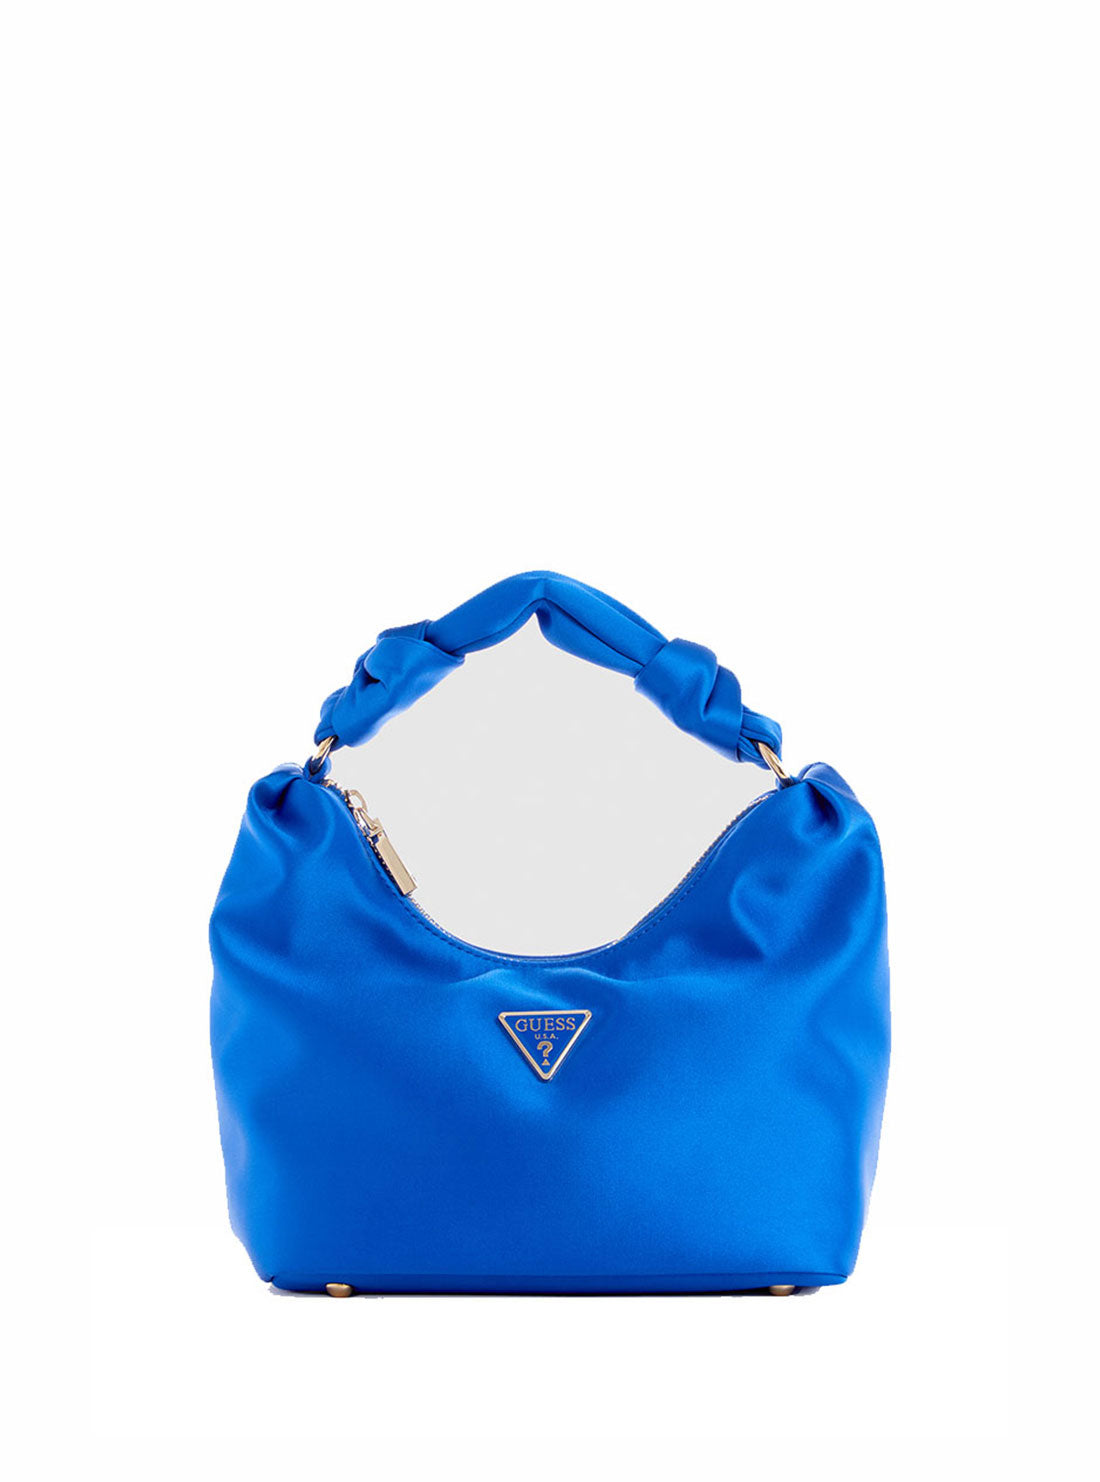 GUESS Women's Blue Velina Hobo Bag EG876502 Front View